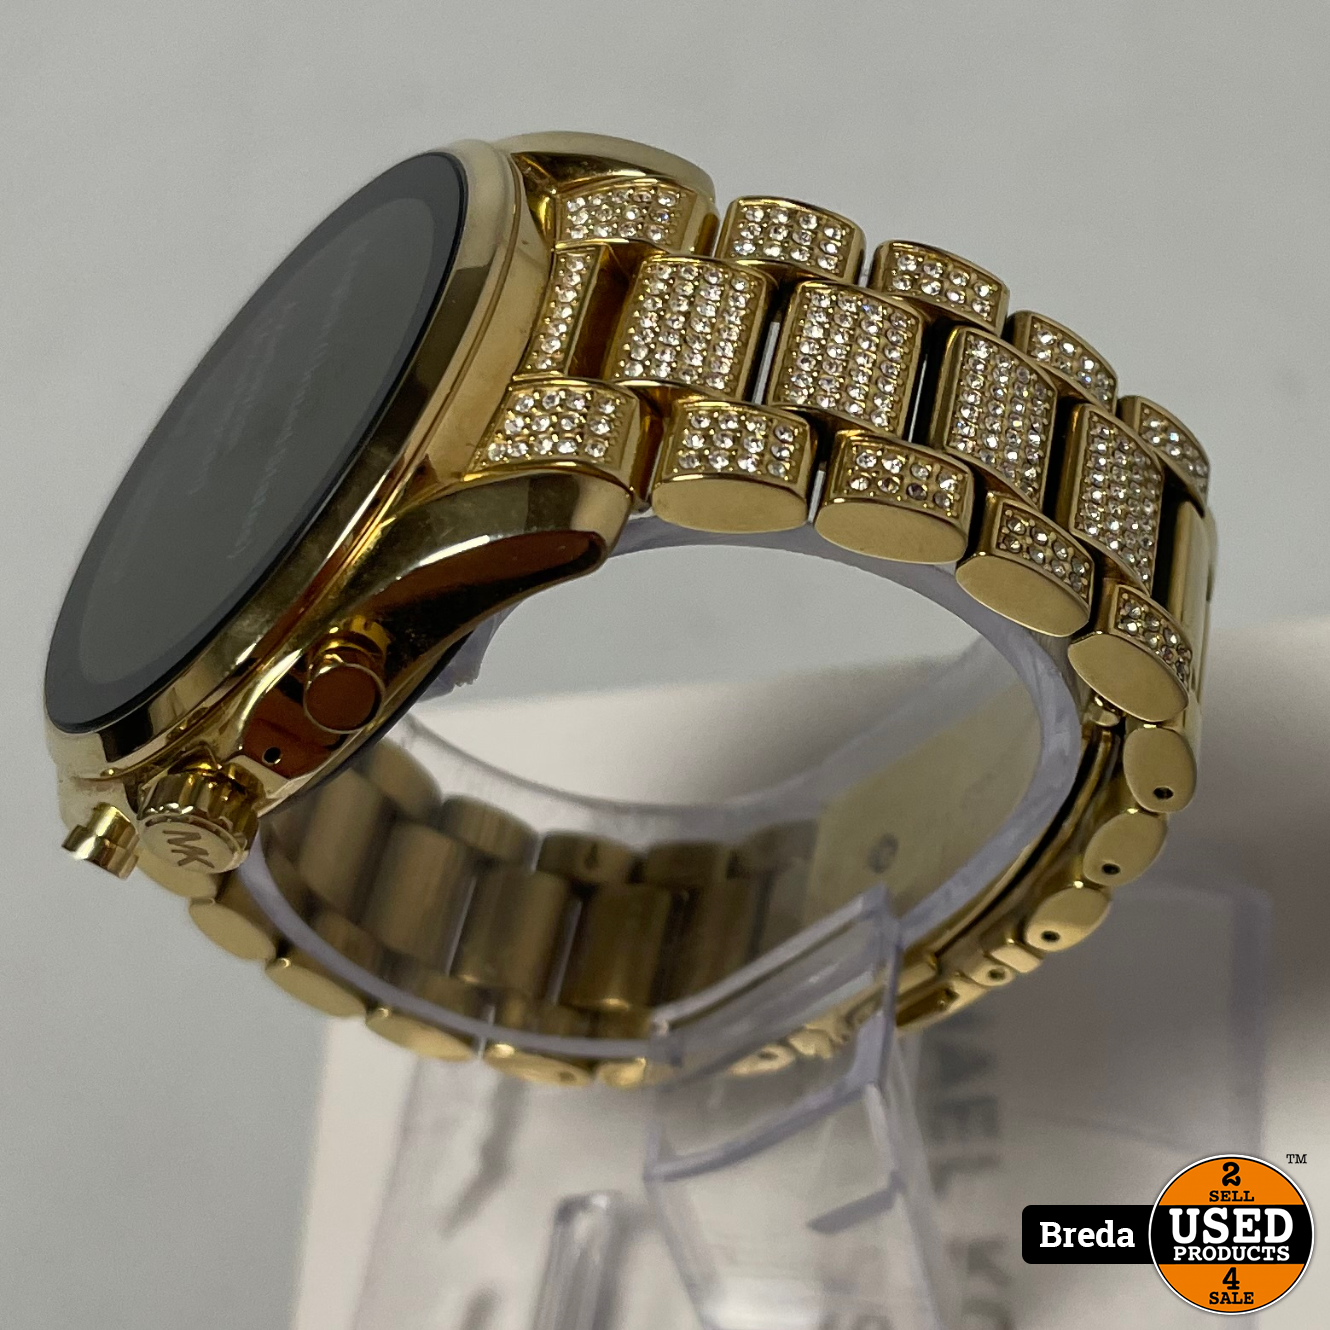 Michael Kors MK8296 horloge online kopen  Michael Kors MK 8296